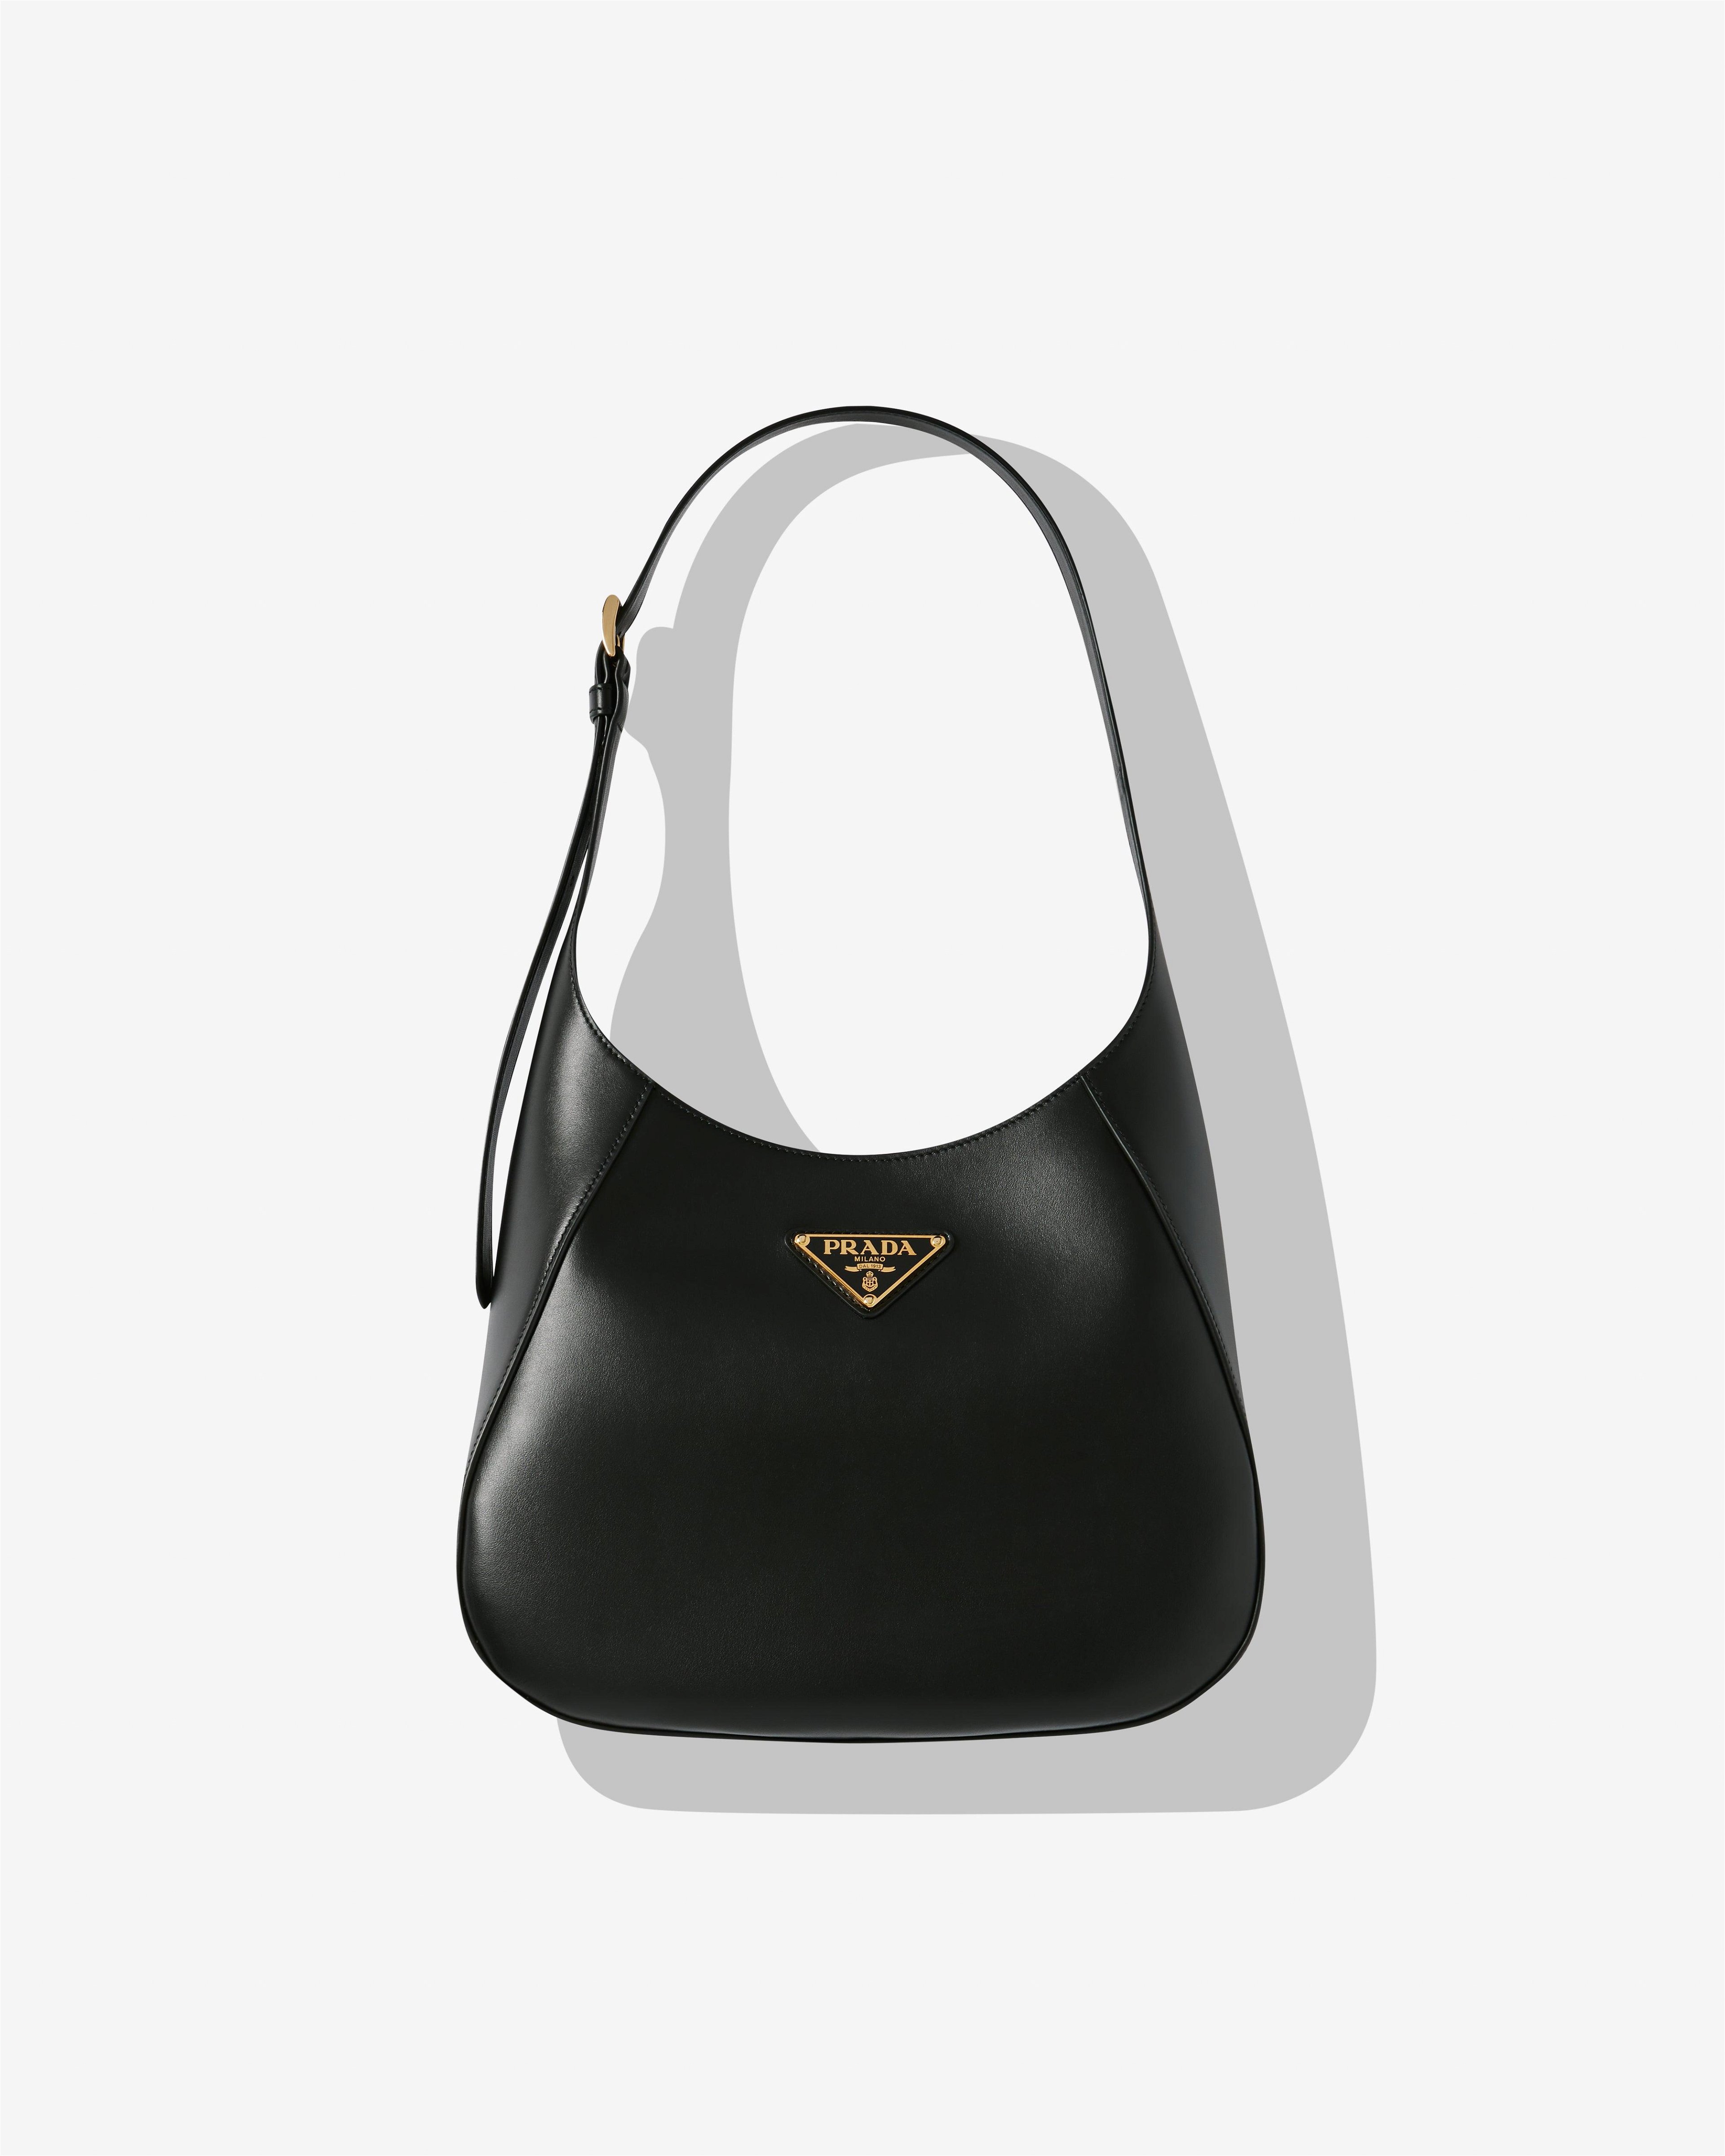 Prada - Women's Large Leather Handbag - (Black) by PRADA